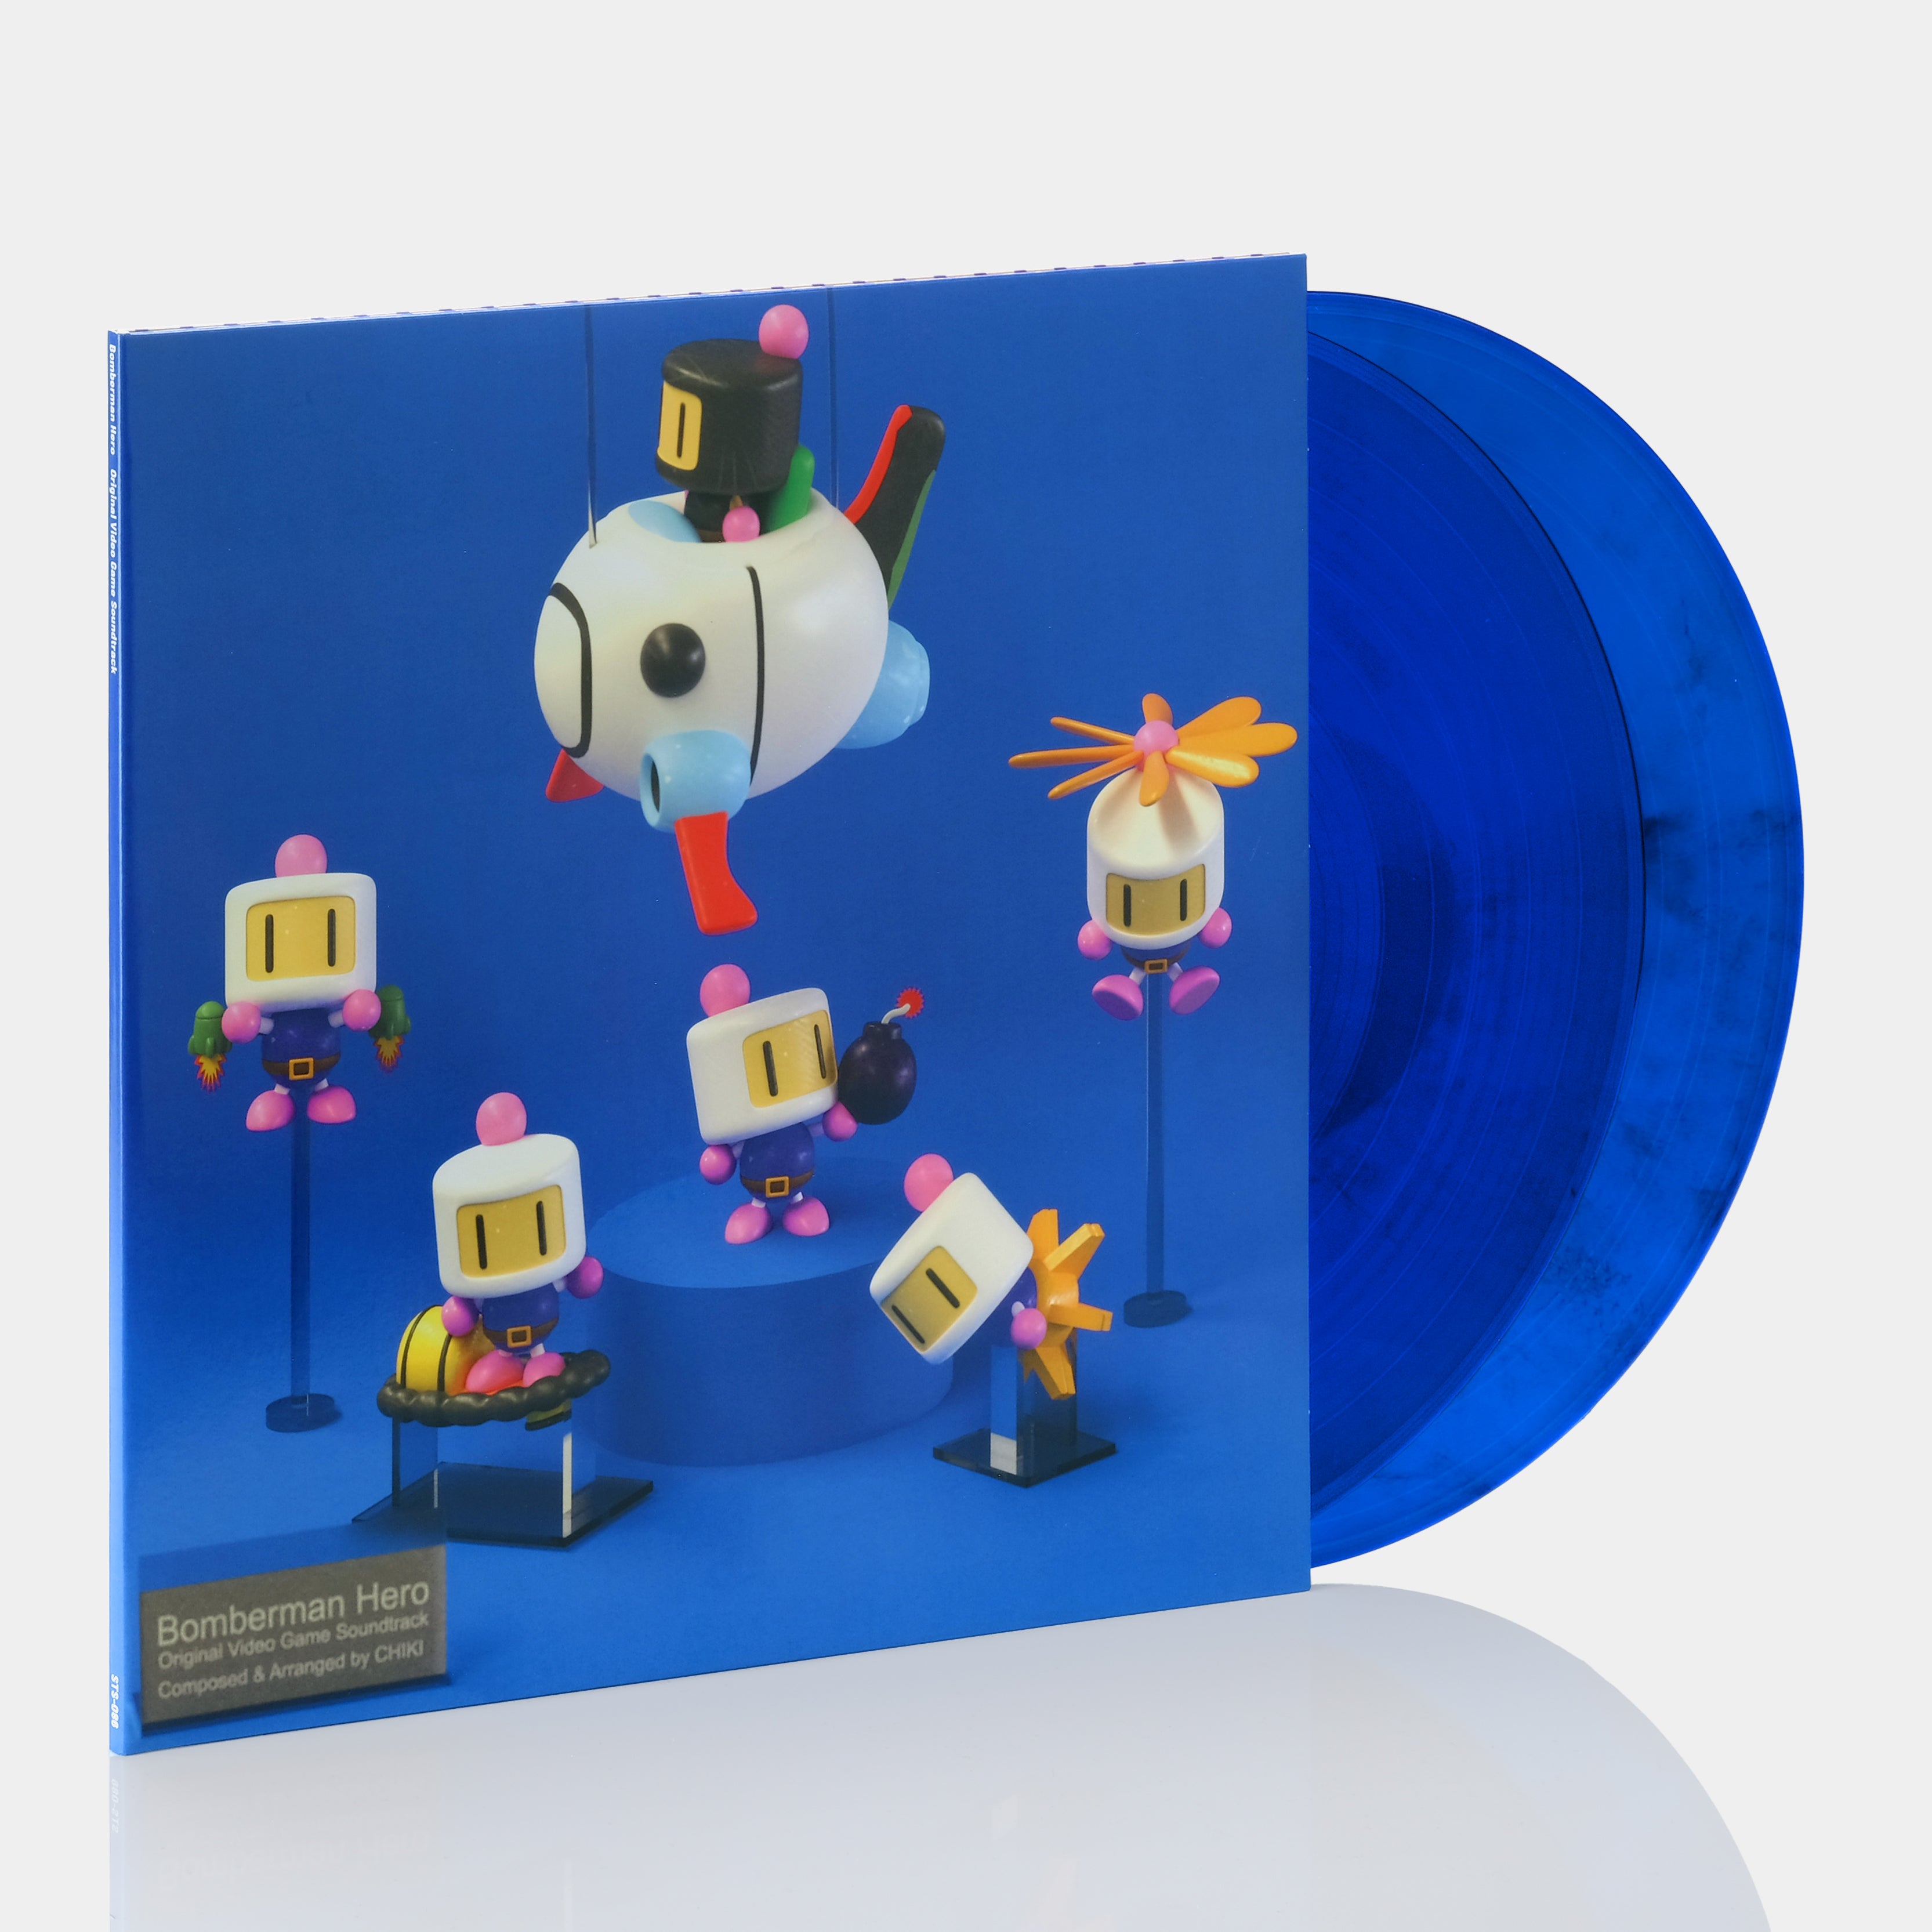 Bomberman / Bomberman II - Vinyl Soundtrack (Exclusive Variant) – Limited  Run Games